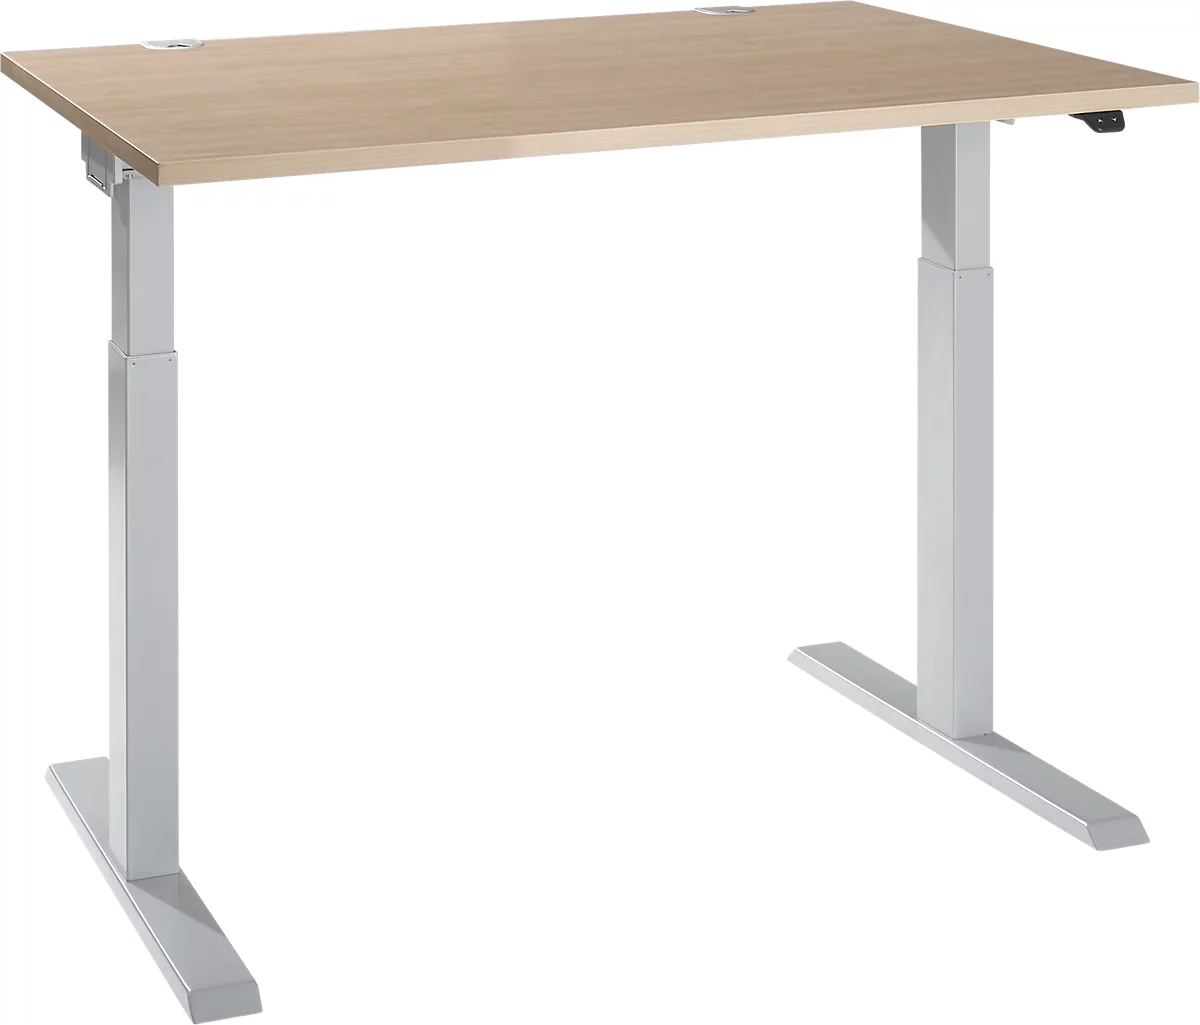 Schäfer Shop Select ERGO-T 2.0 tafel, elektrisch in hoogte verstelbaar, rechthoekig, T-voet, B 1200 x D 800 x H 715-1205 mm, eiken/wit aluminium